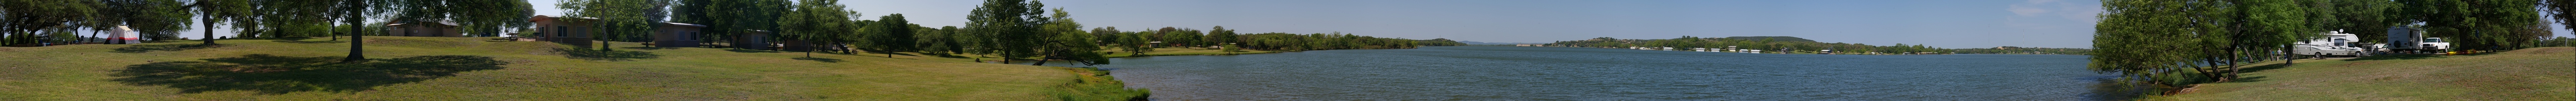 Panoramic lake and campsites